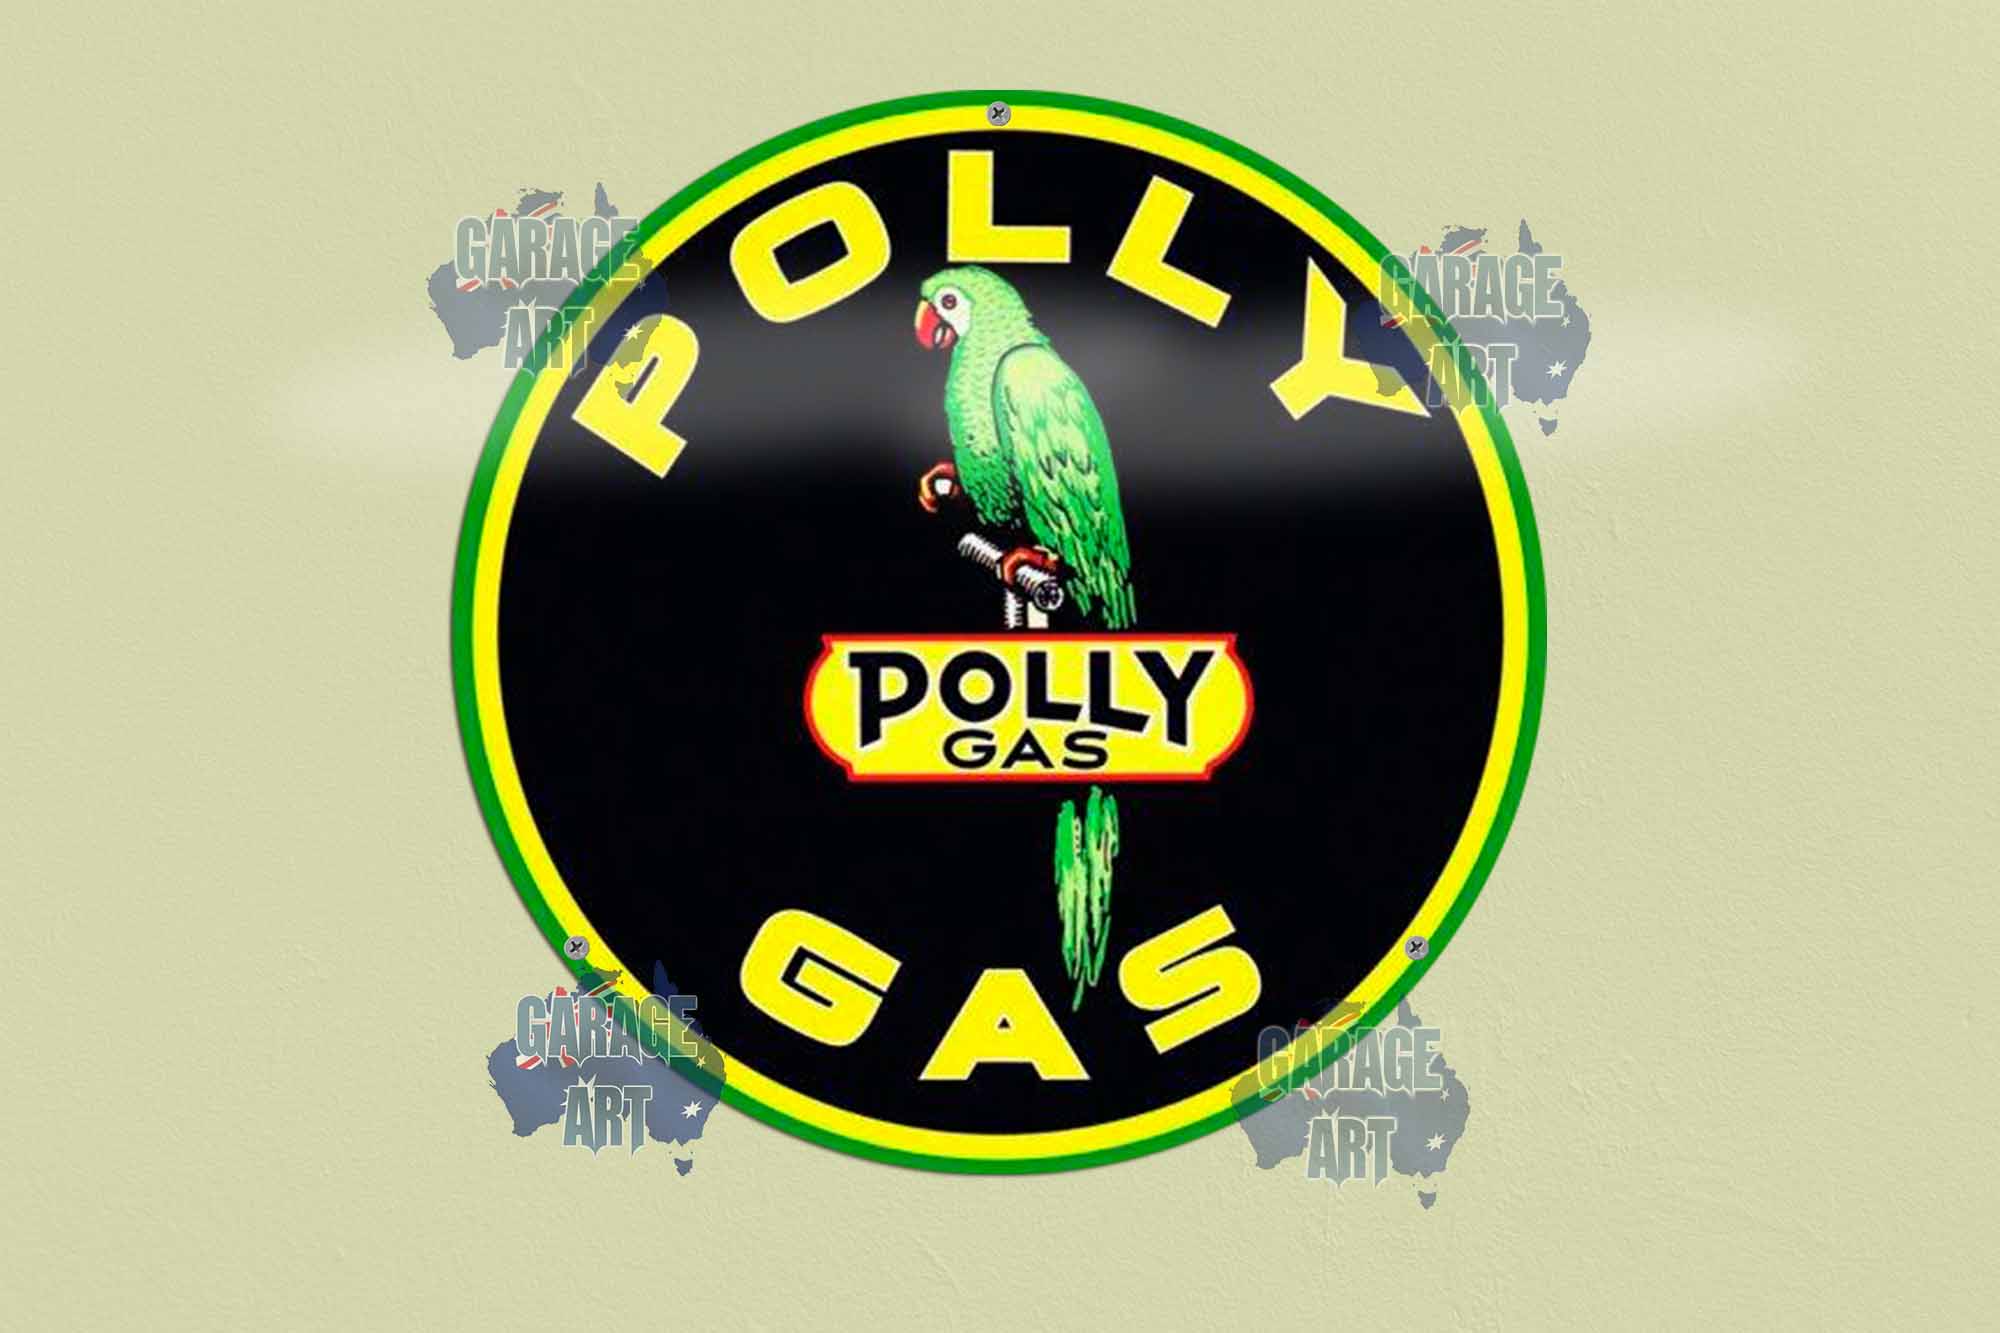 Polly Gas 3D 355mmDIa Tin Sign freeshipping - garageartaustralia